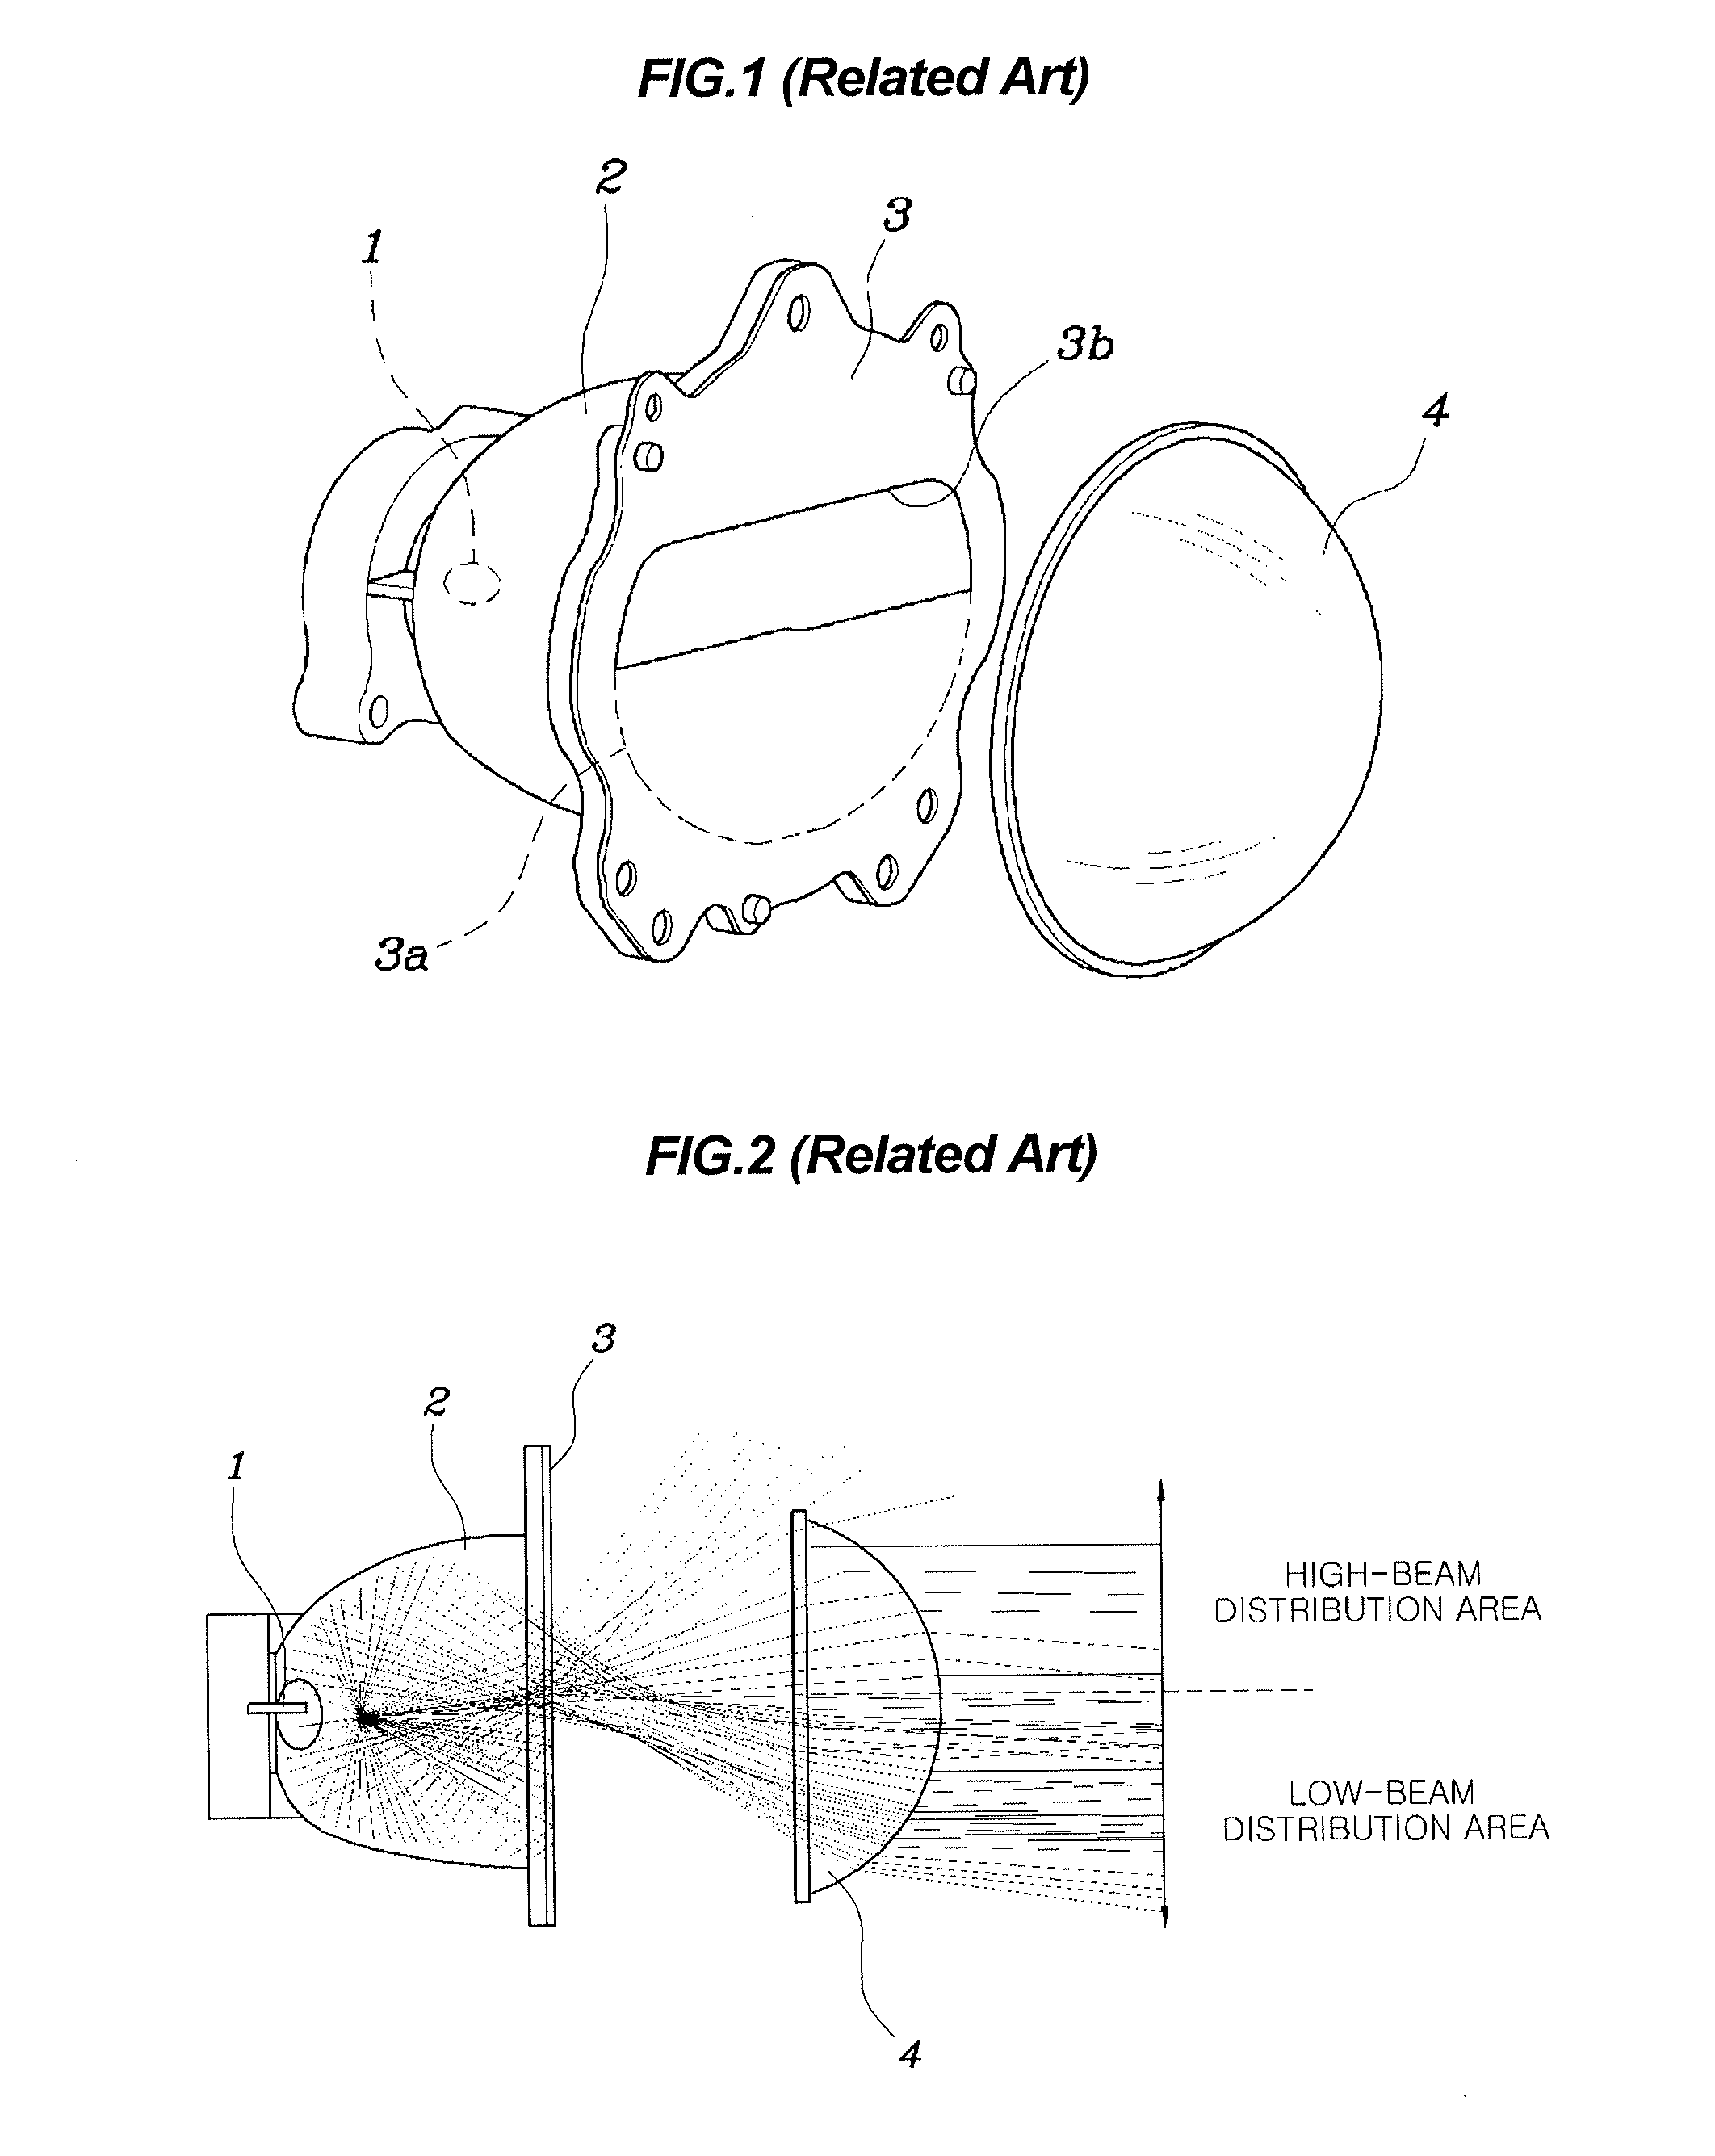 Shield apparatus for low-beam head lamp